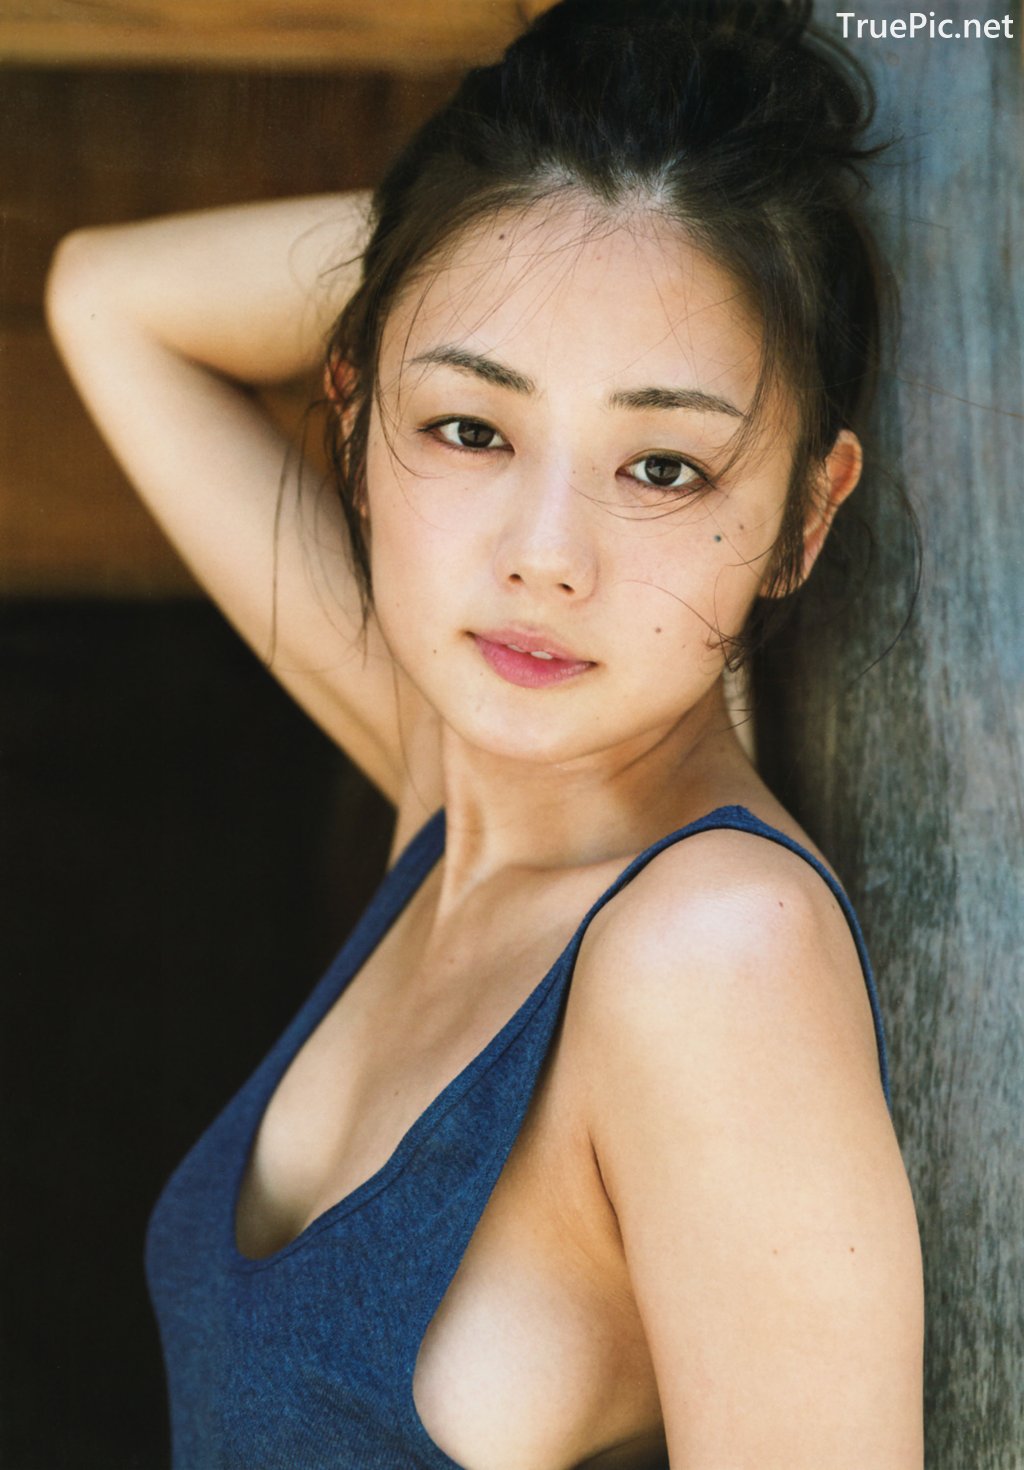 Image-Japanese-Actress-Gravure-Idol-Moemi-Katayama-Mermaid-From-Tokyo-Japan-TruePic.net- Picture-55